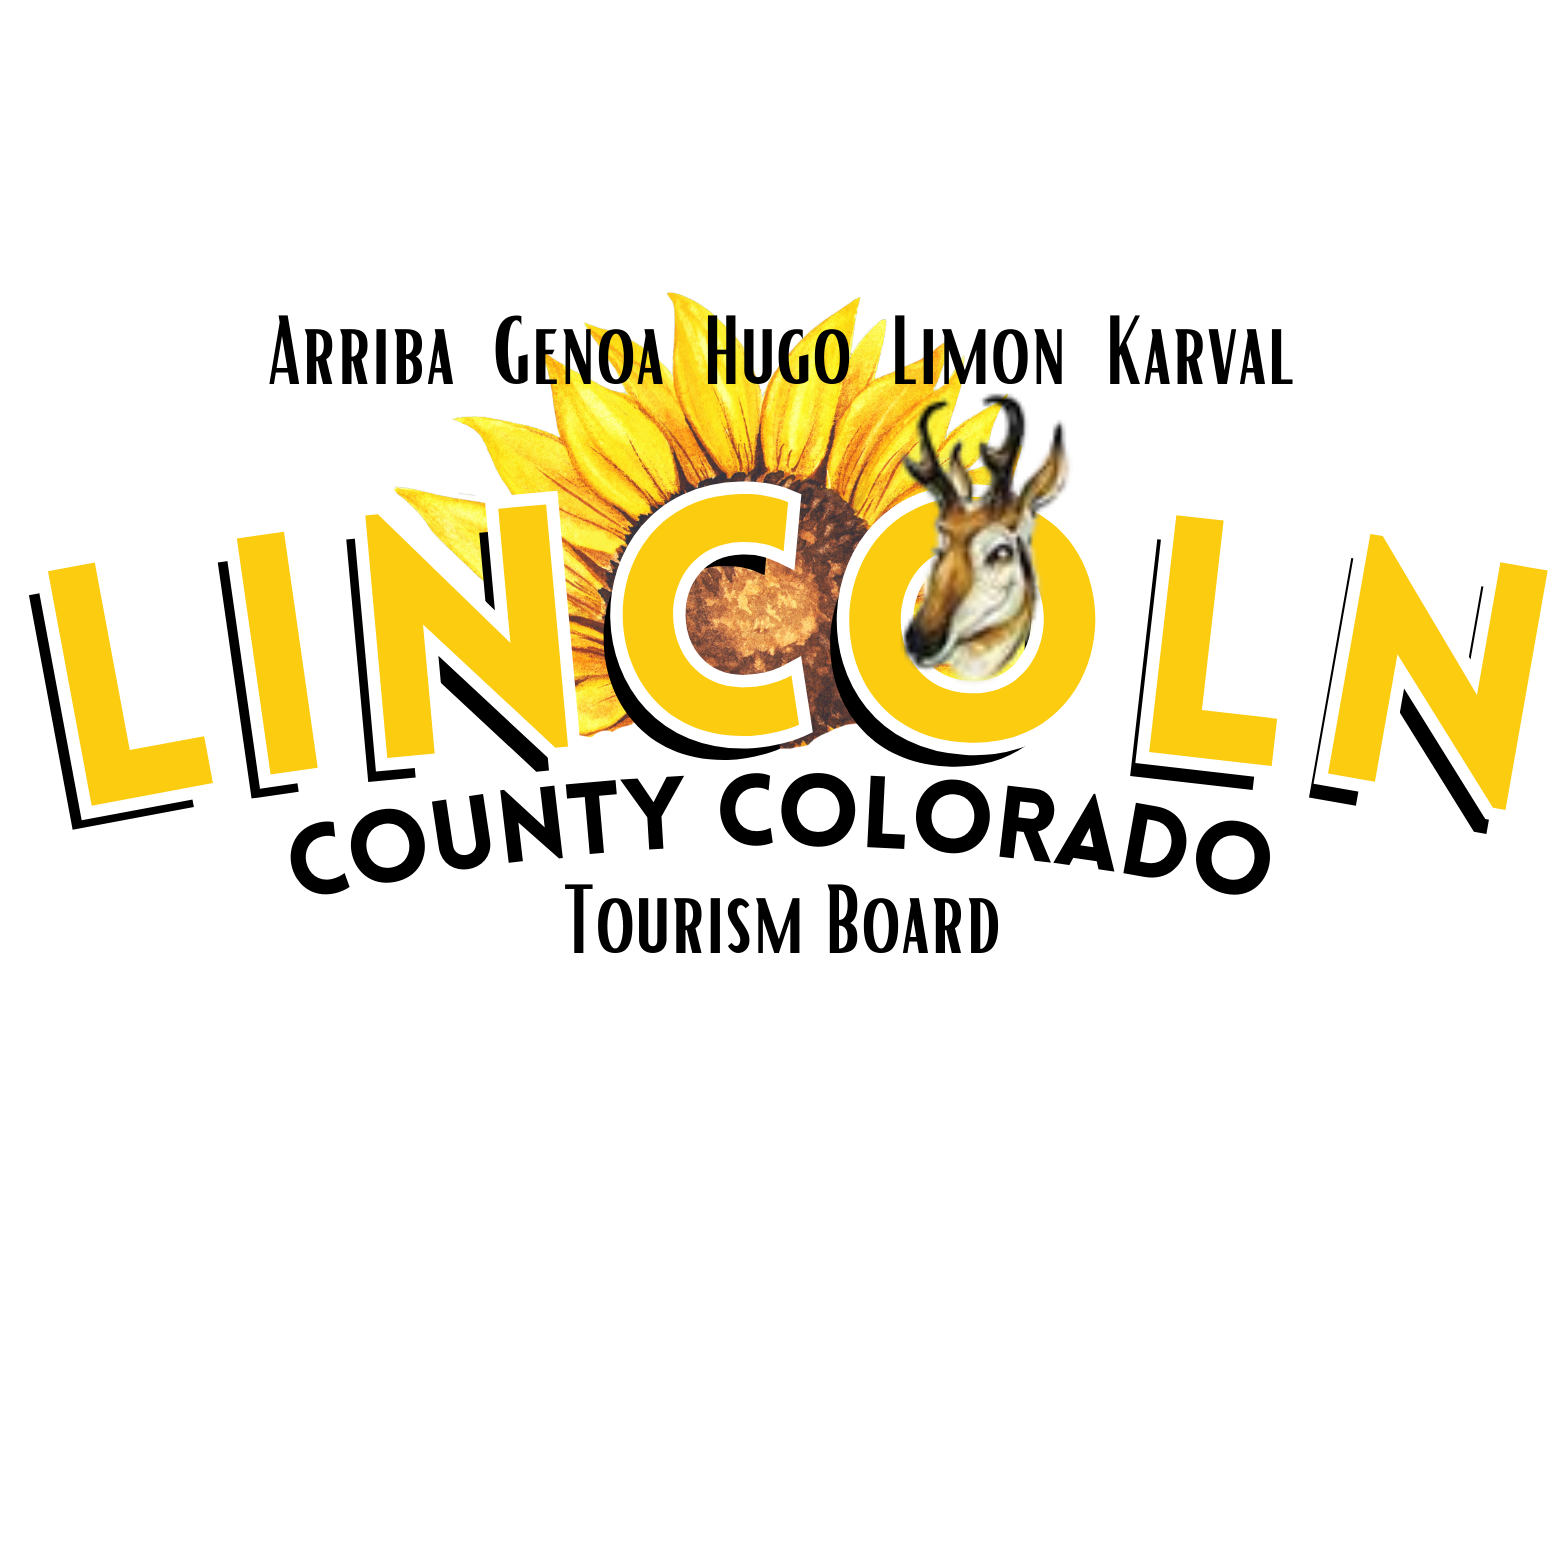 Lincoln County Tourism Board